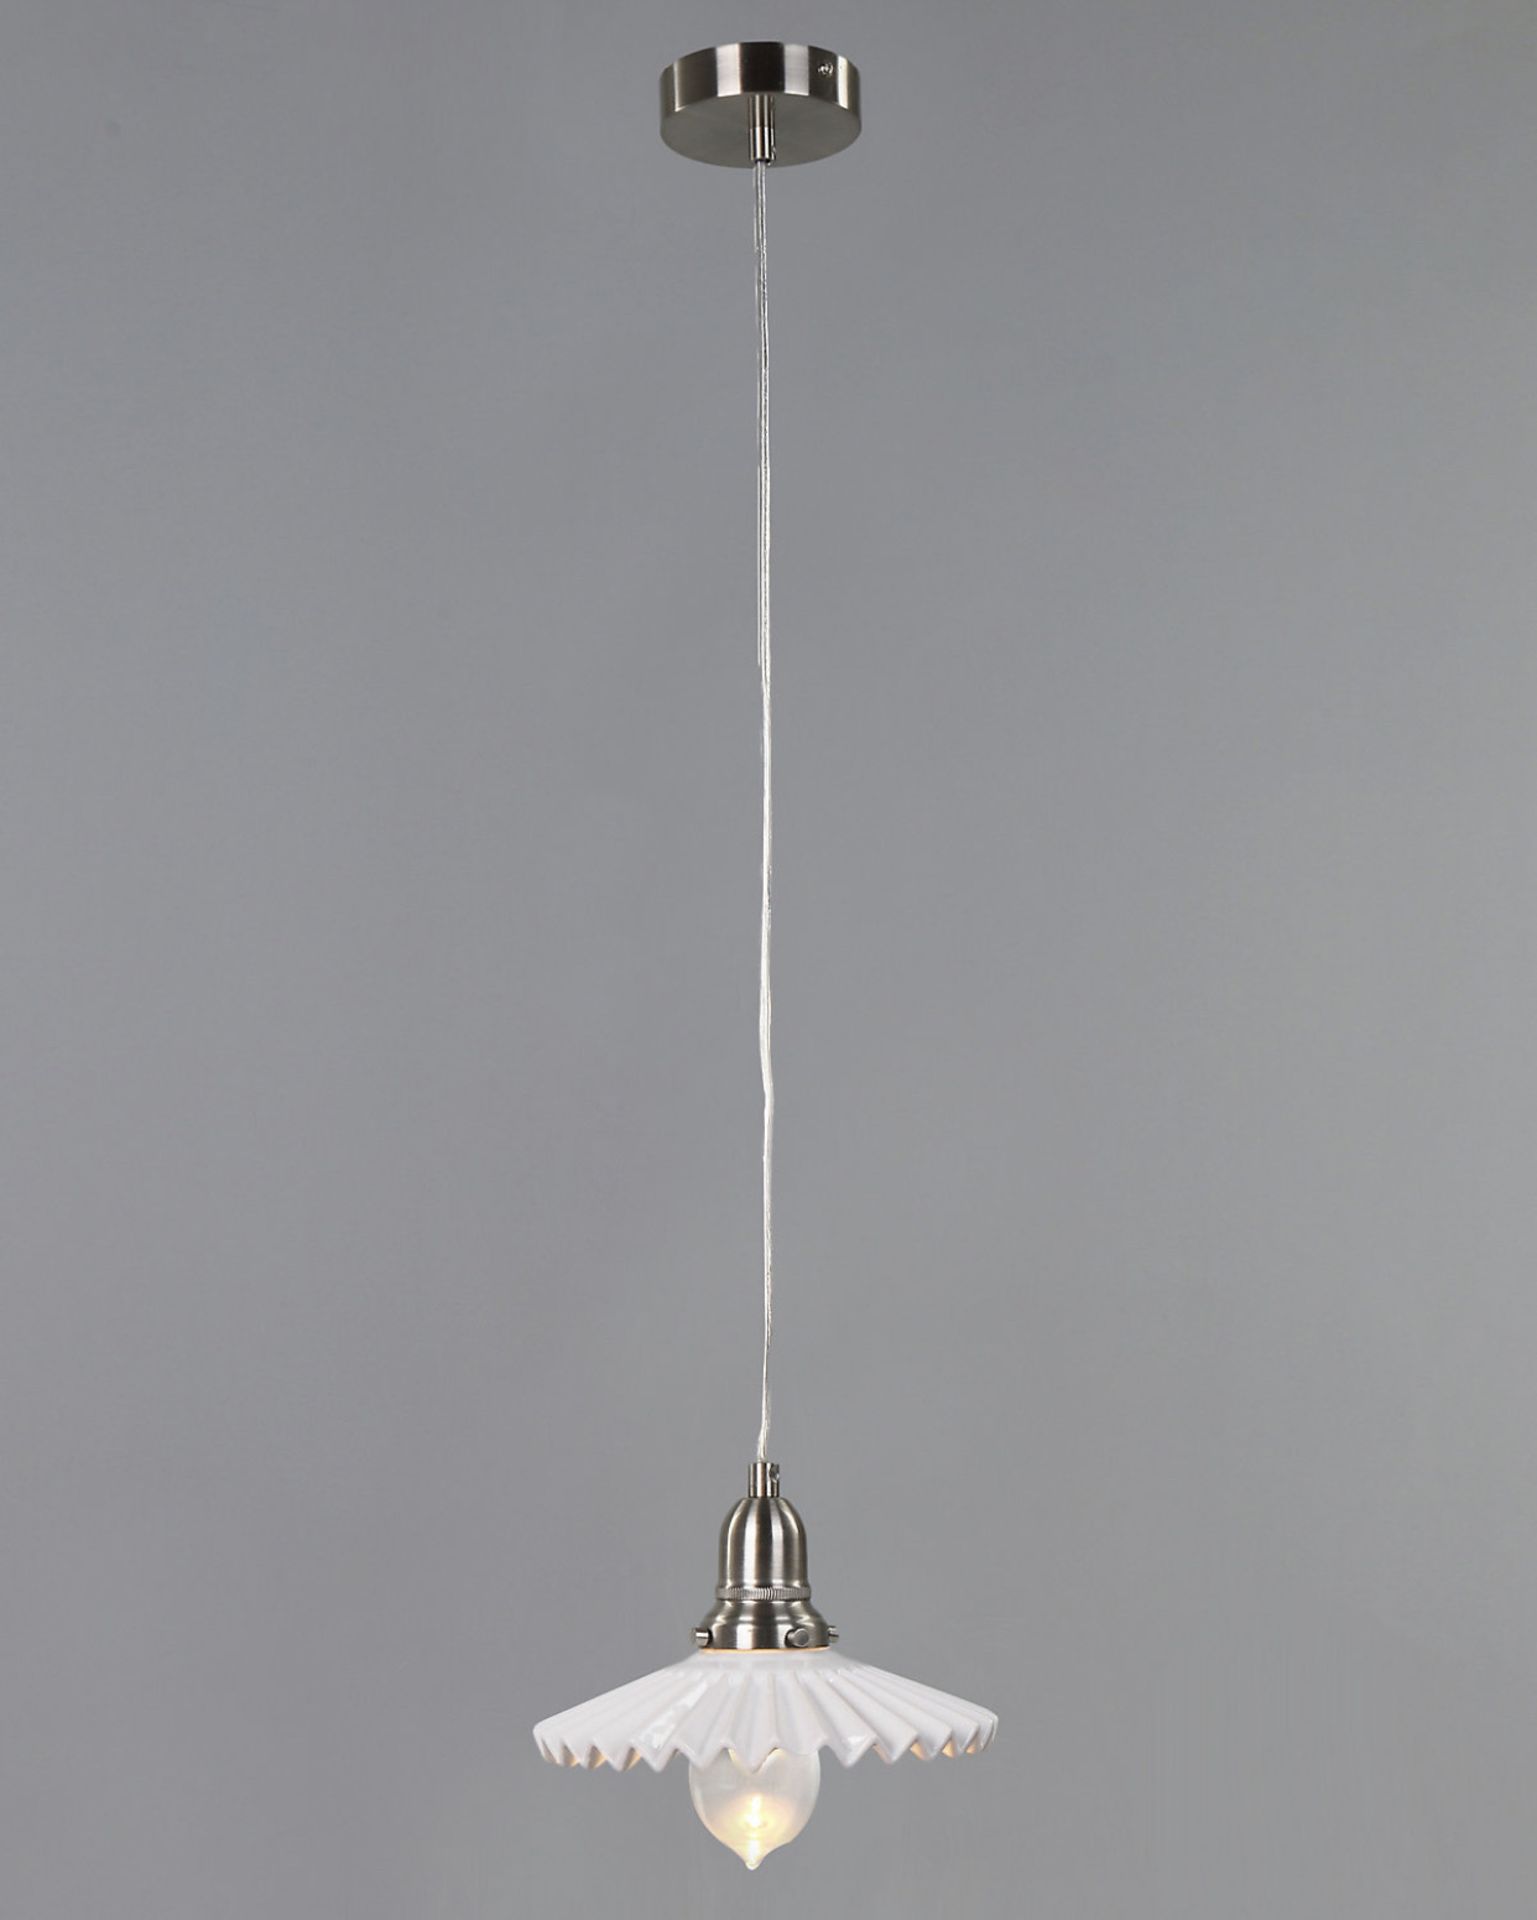 Ceramic Single Pendant Light RRP £100